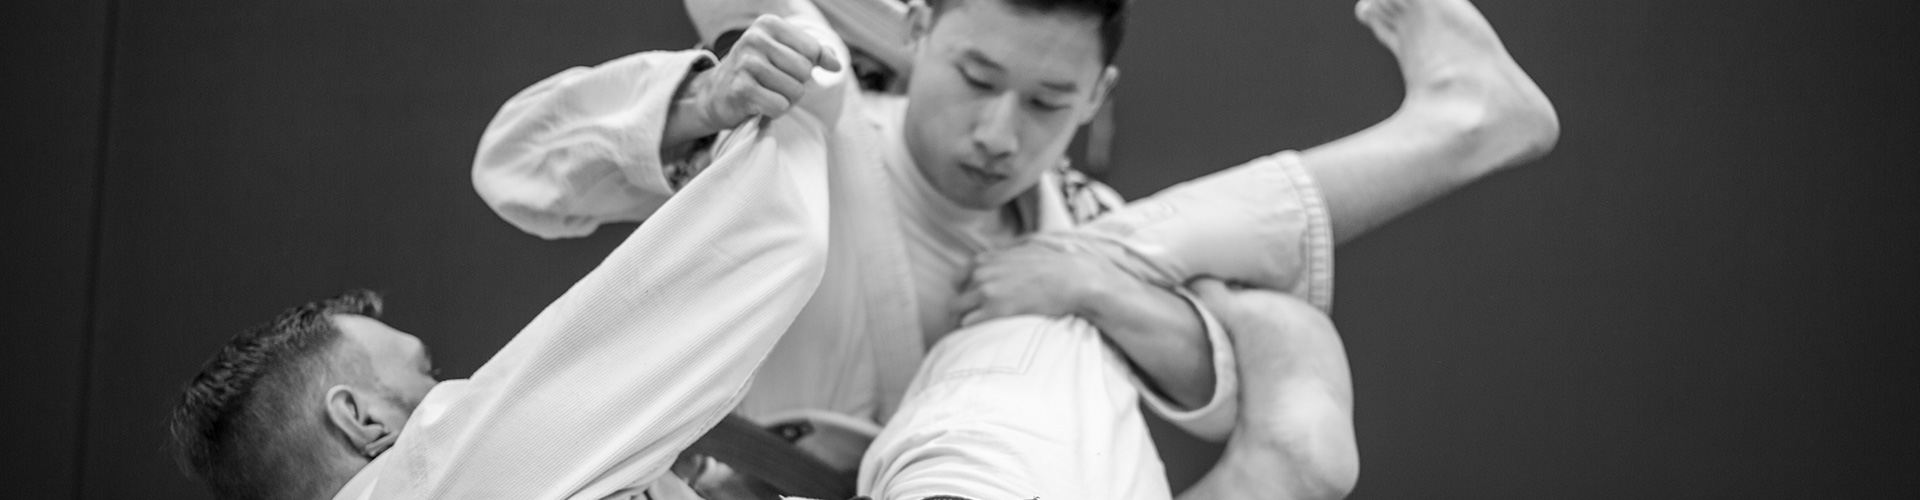 Martial Arts Schools Brisbane - BJJ Brisbane | Get into BJJ Today!